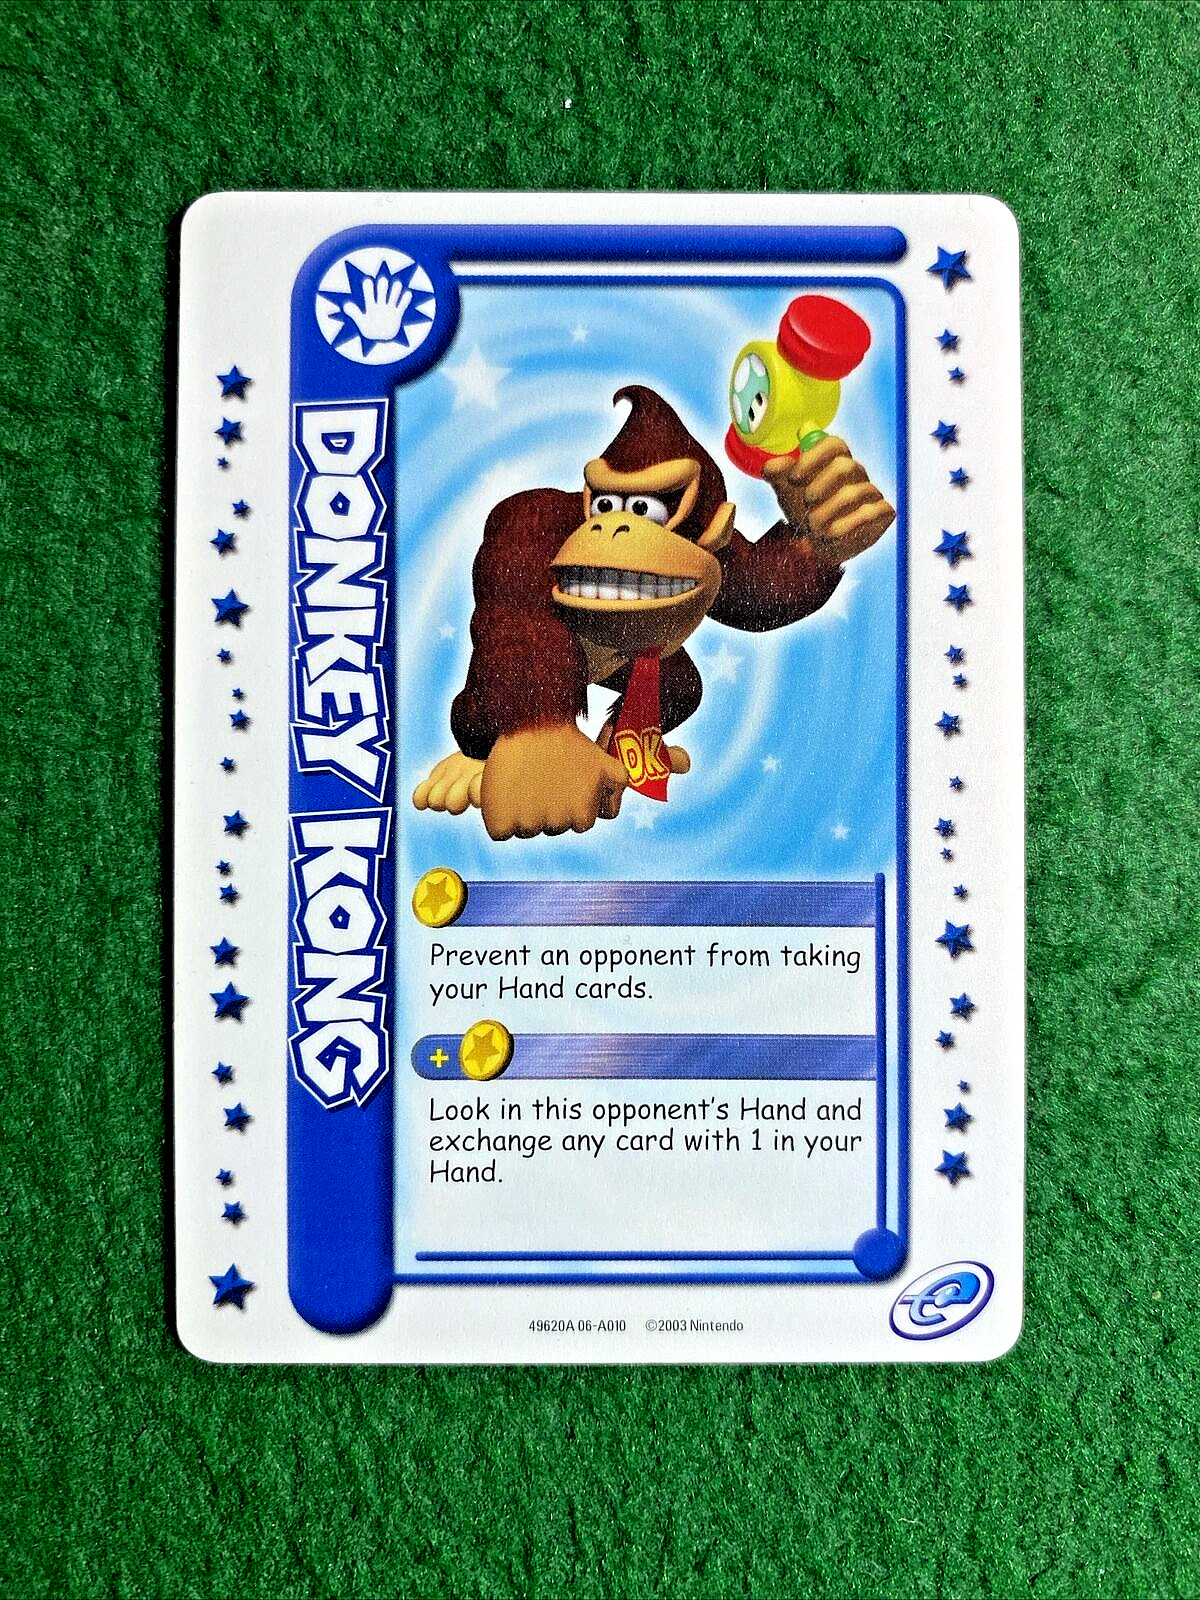 🐬🐬 2003 Nintendo Mario Party Donkey Kong Card 🐬🐬